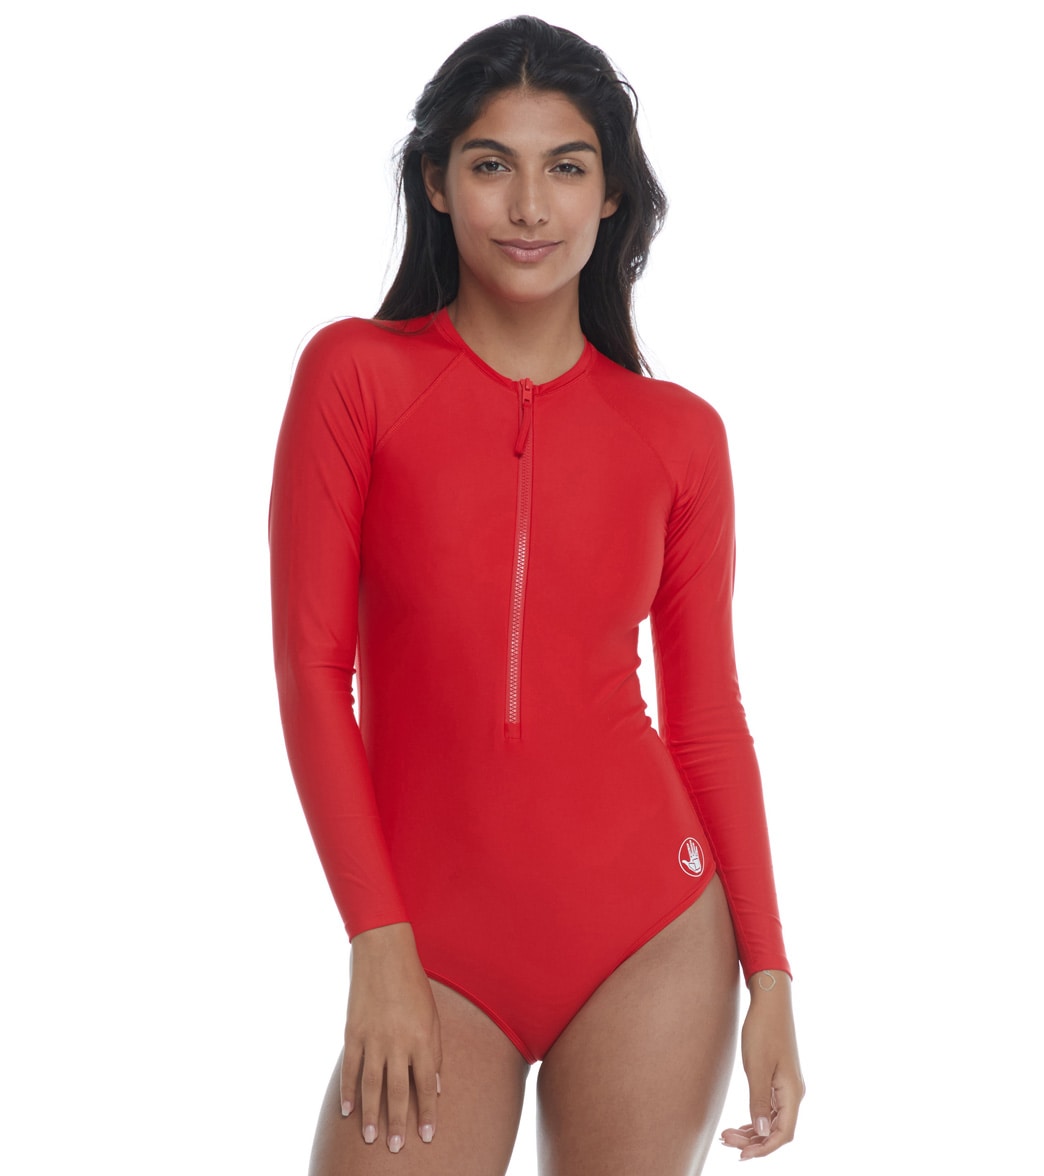 Raffa Rashguard One-Piece Swimsuit